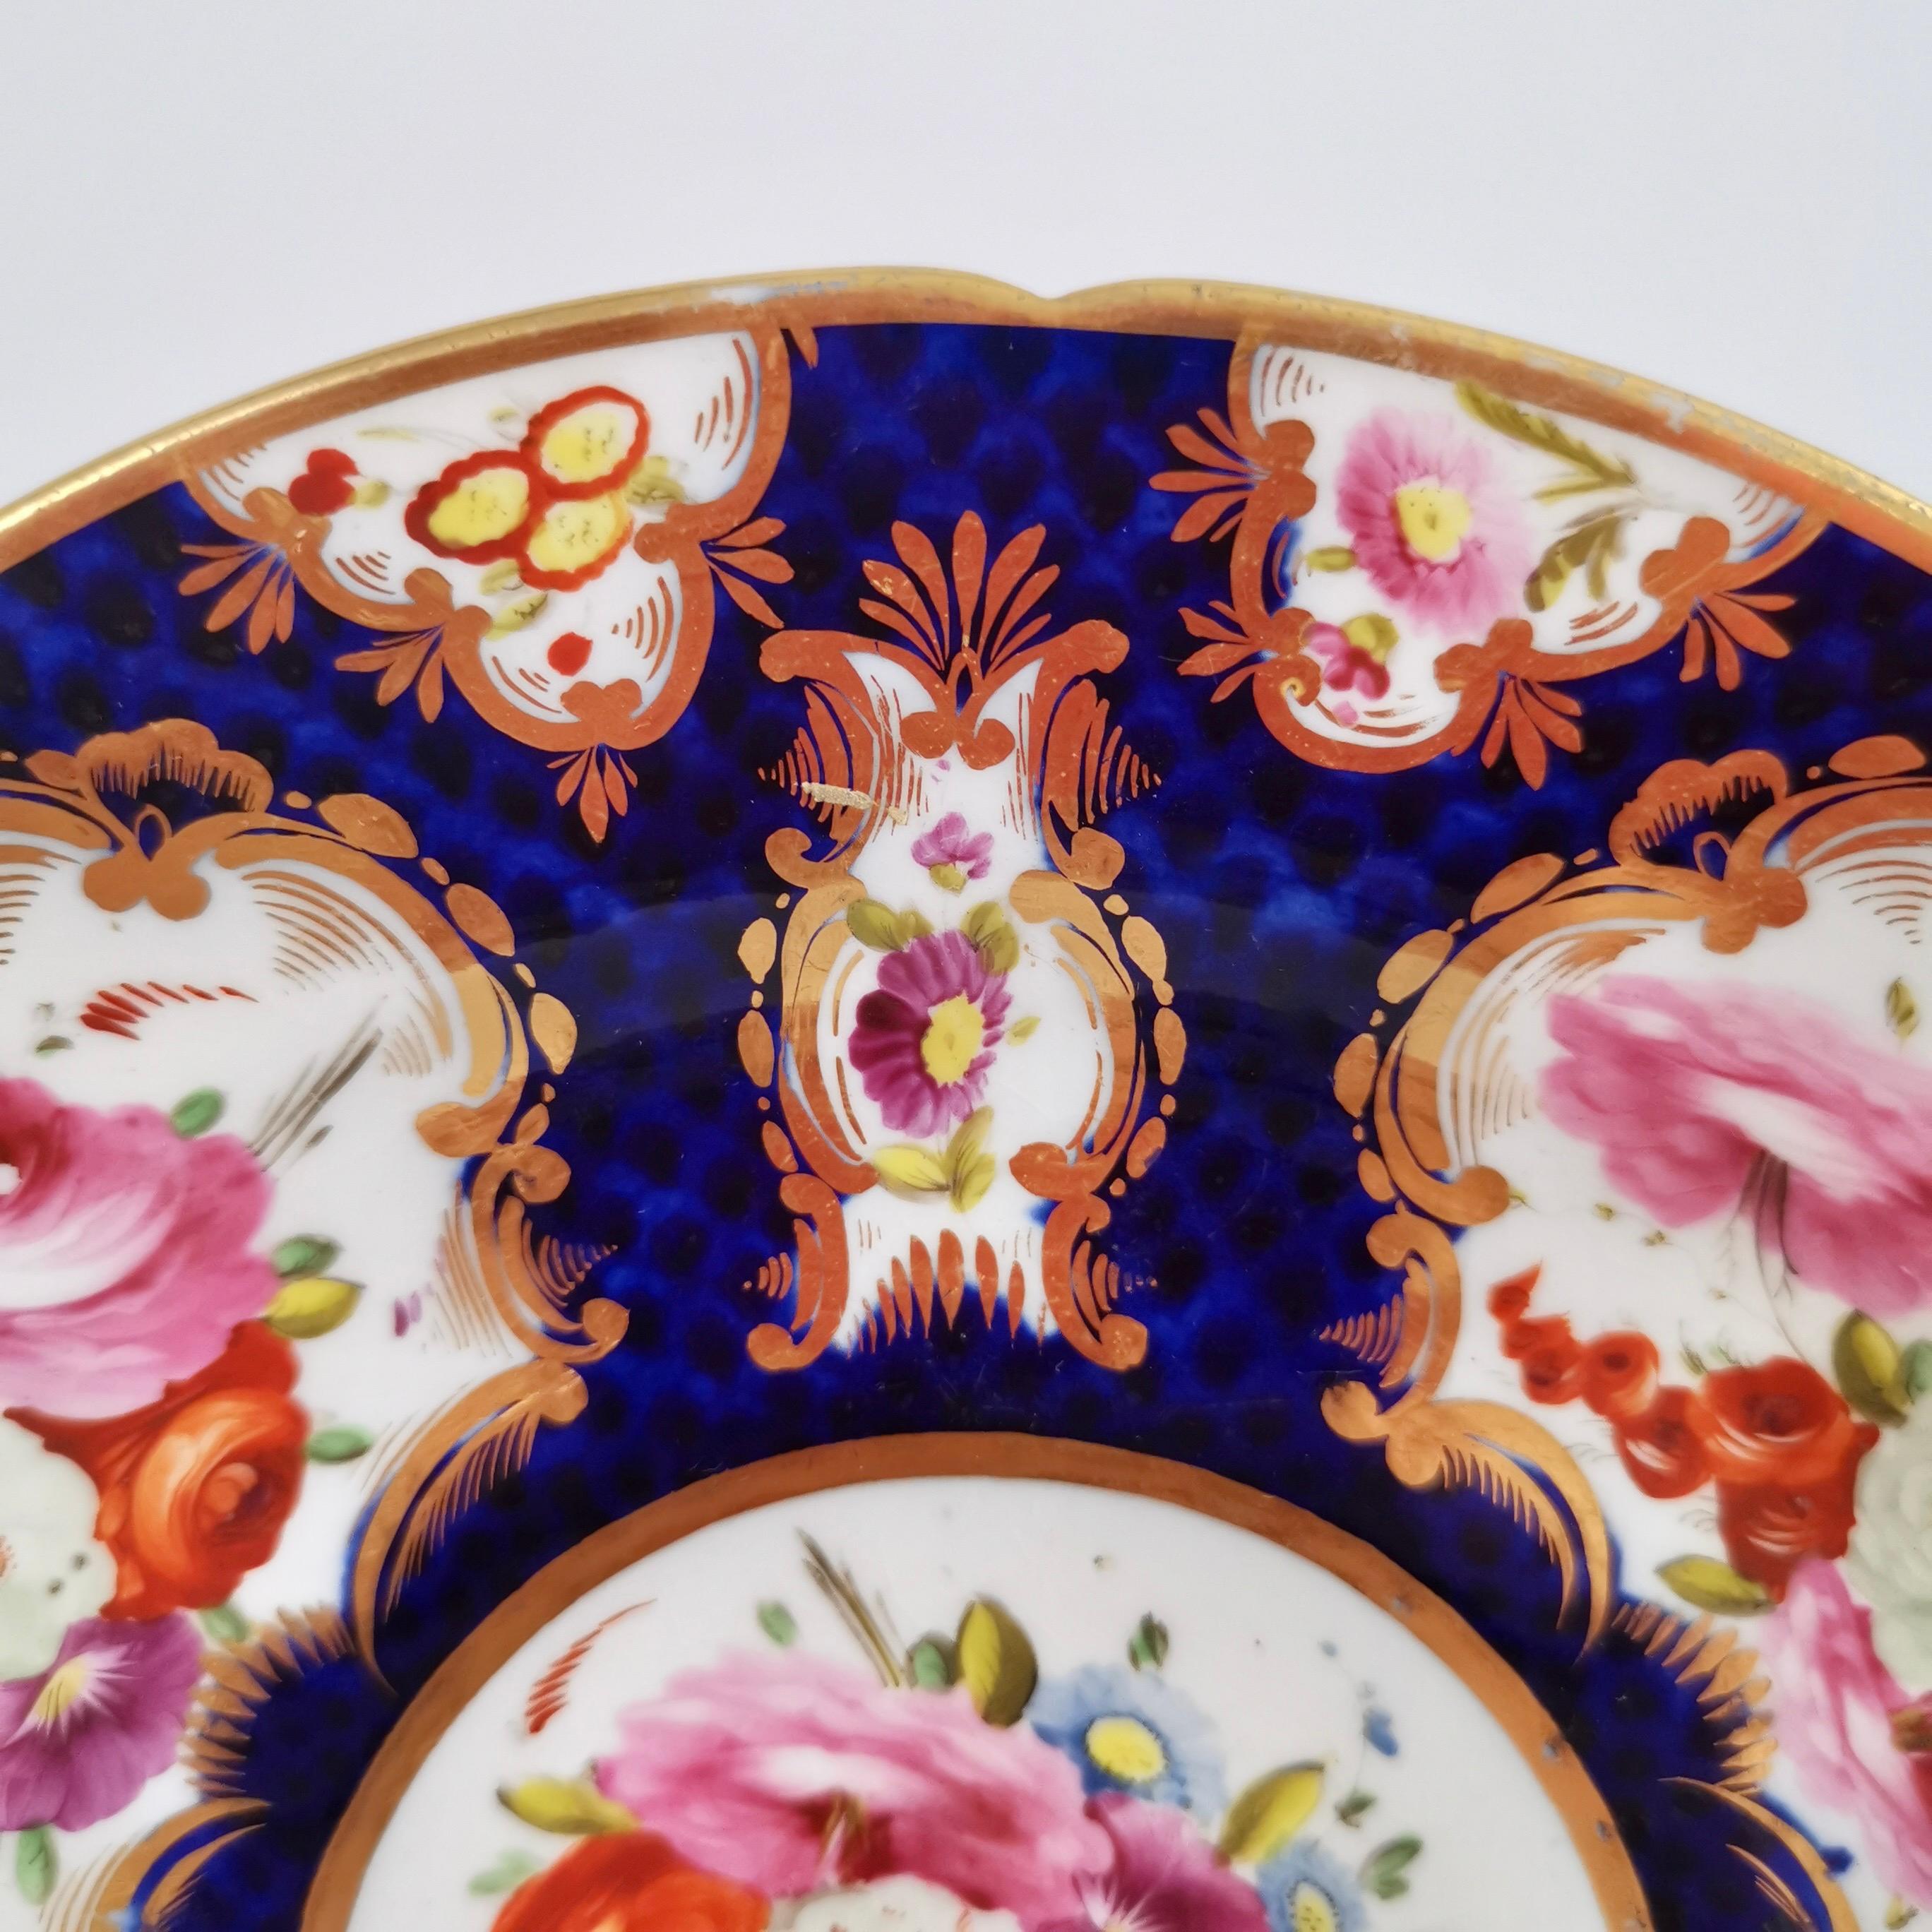 Coalport Small Porcelain Plate, Cobalt Blue, Gilt and Flowers, Regency 1810-1815 1